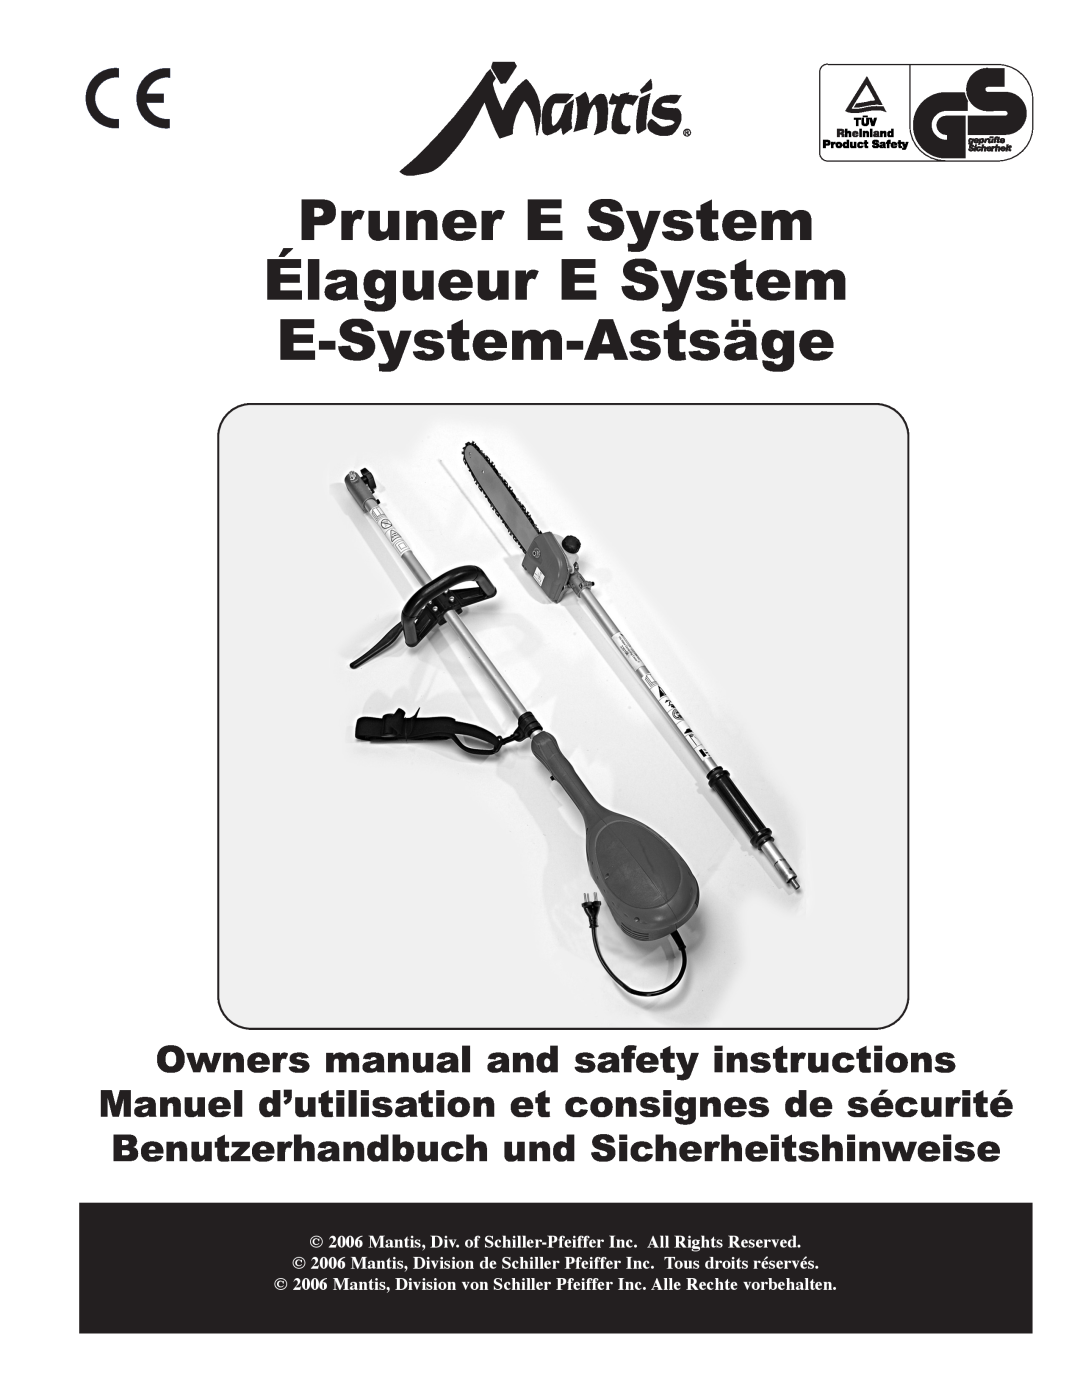 Mantis Pruner E System owner manual Élagueur E System E-System-Astsäge, Owners manual and safety instructions 